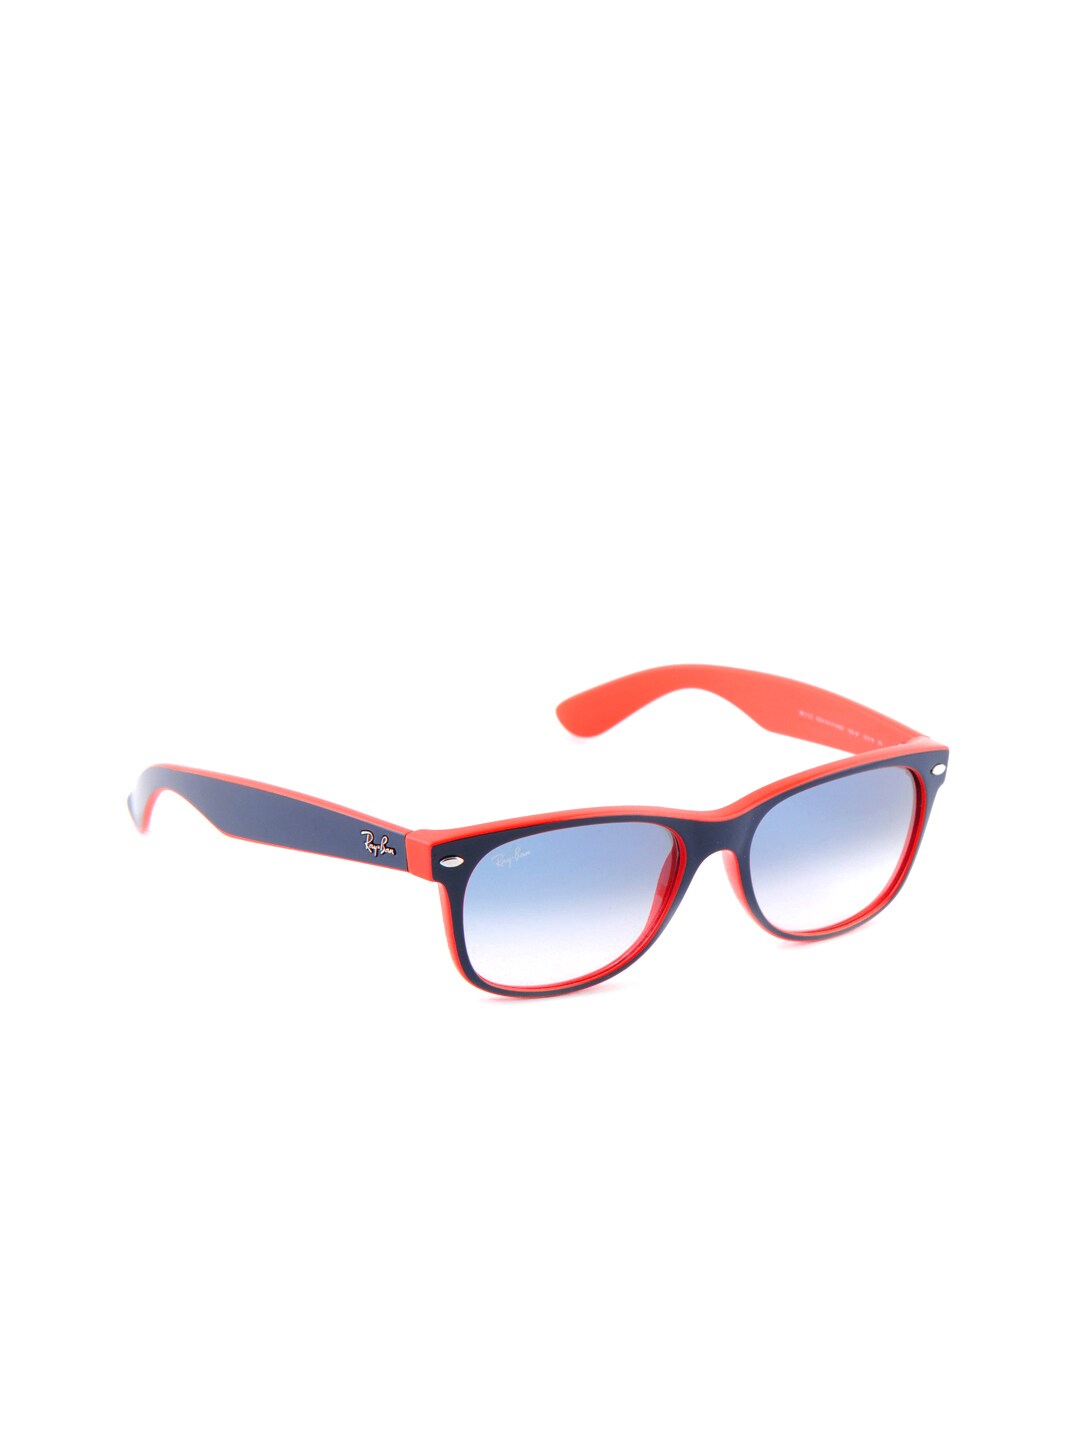 Rayban Men Orange New Wayfarer Sunglasses